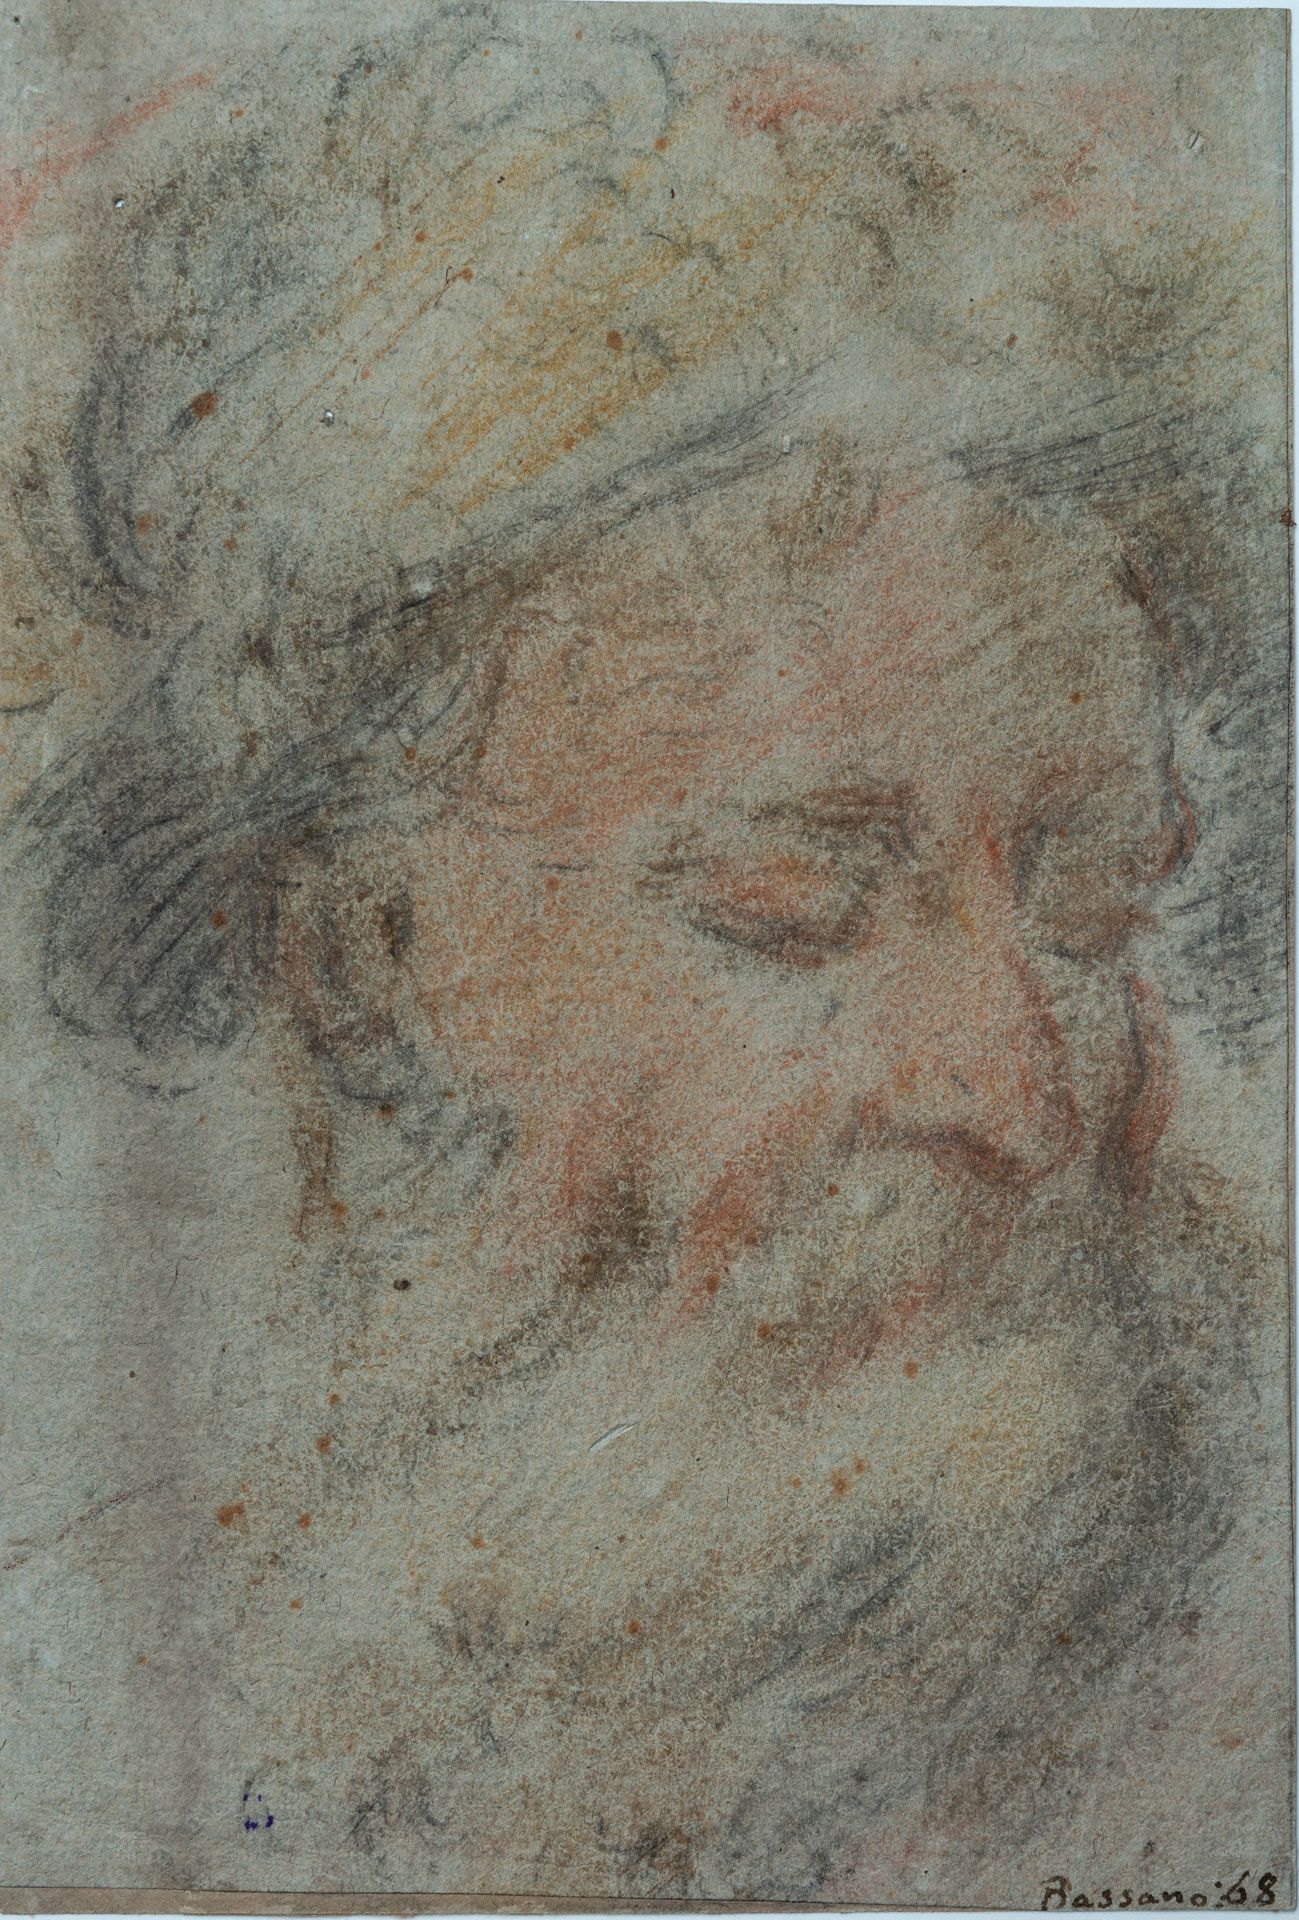 Atrrib. Jacopo da Ponte Bassano (1510/15-1592), Study of a Bearded Man with a Hat